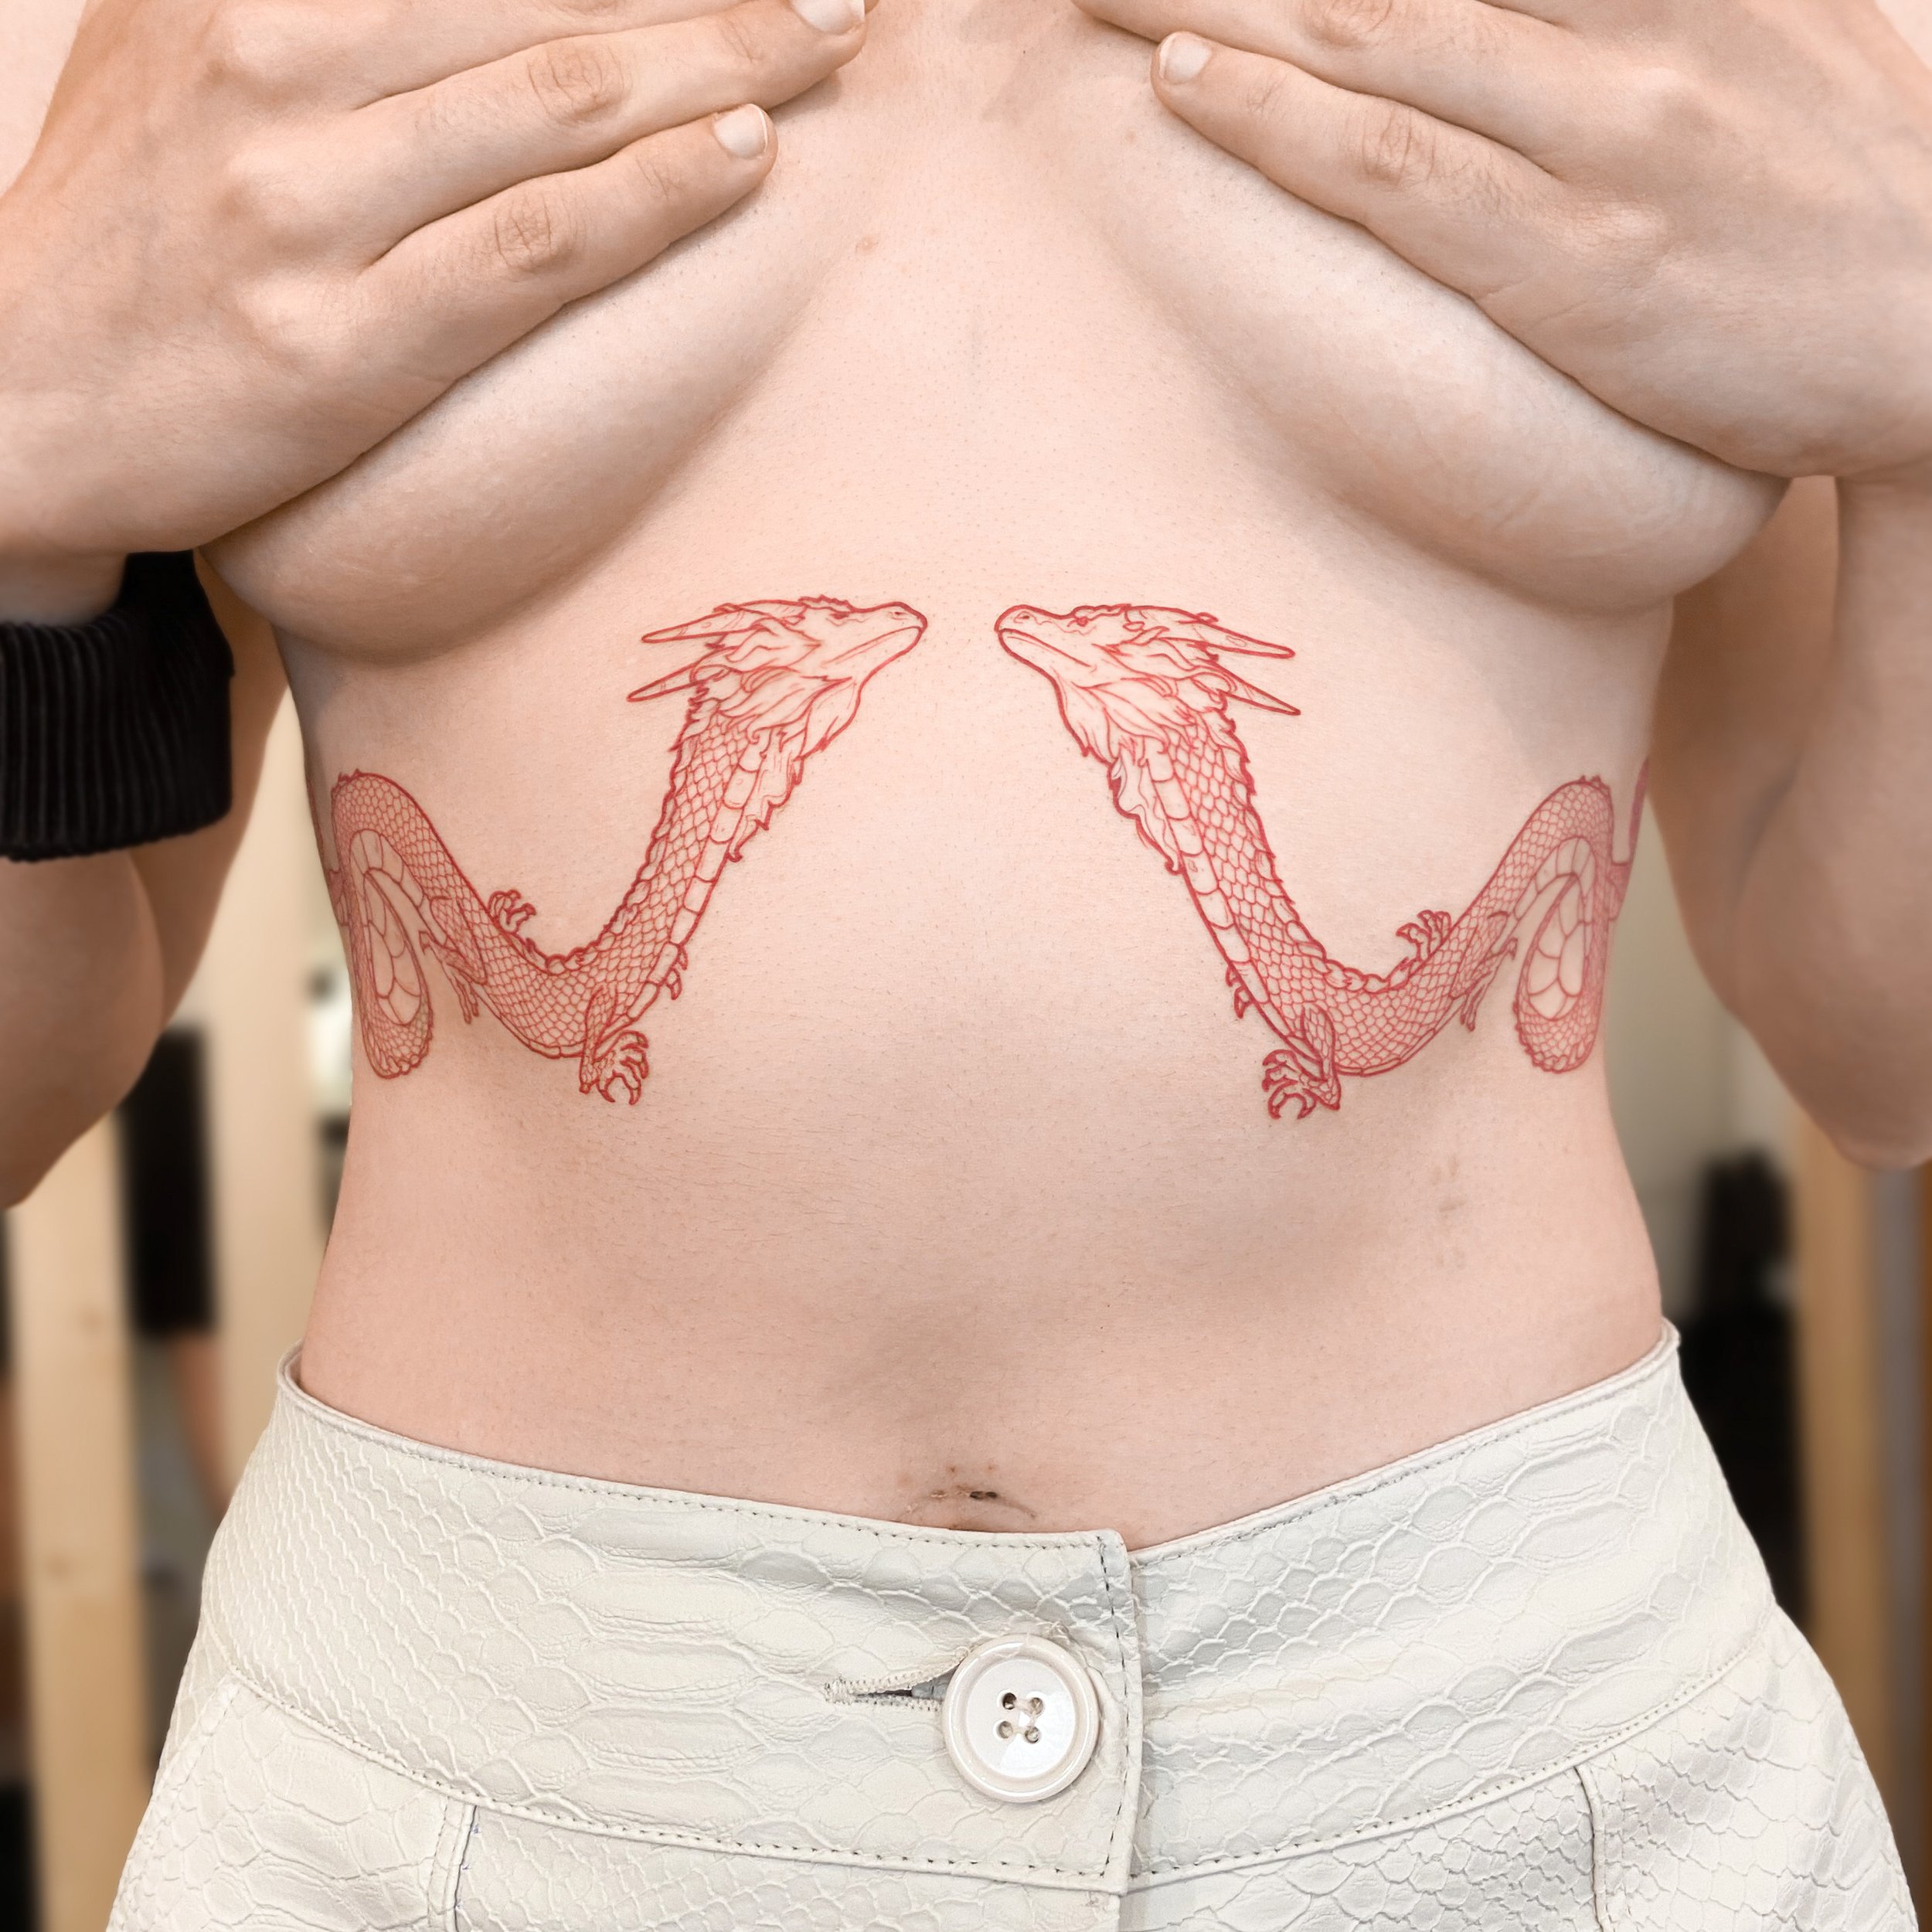 Red dragons tattooed on the stomach by Boy.brush.ttt.jpg